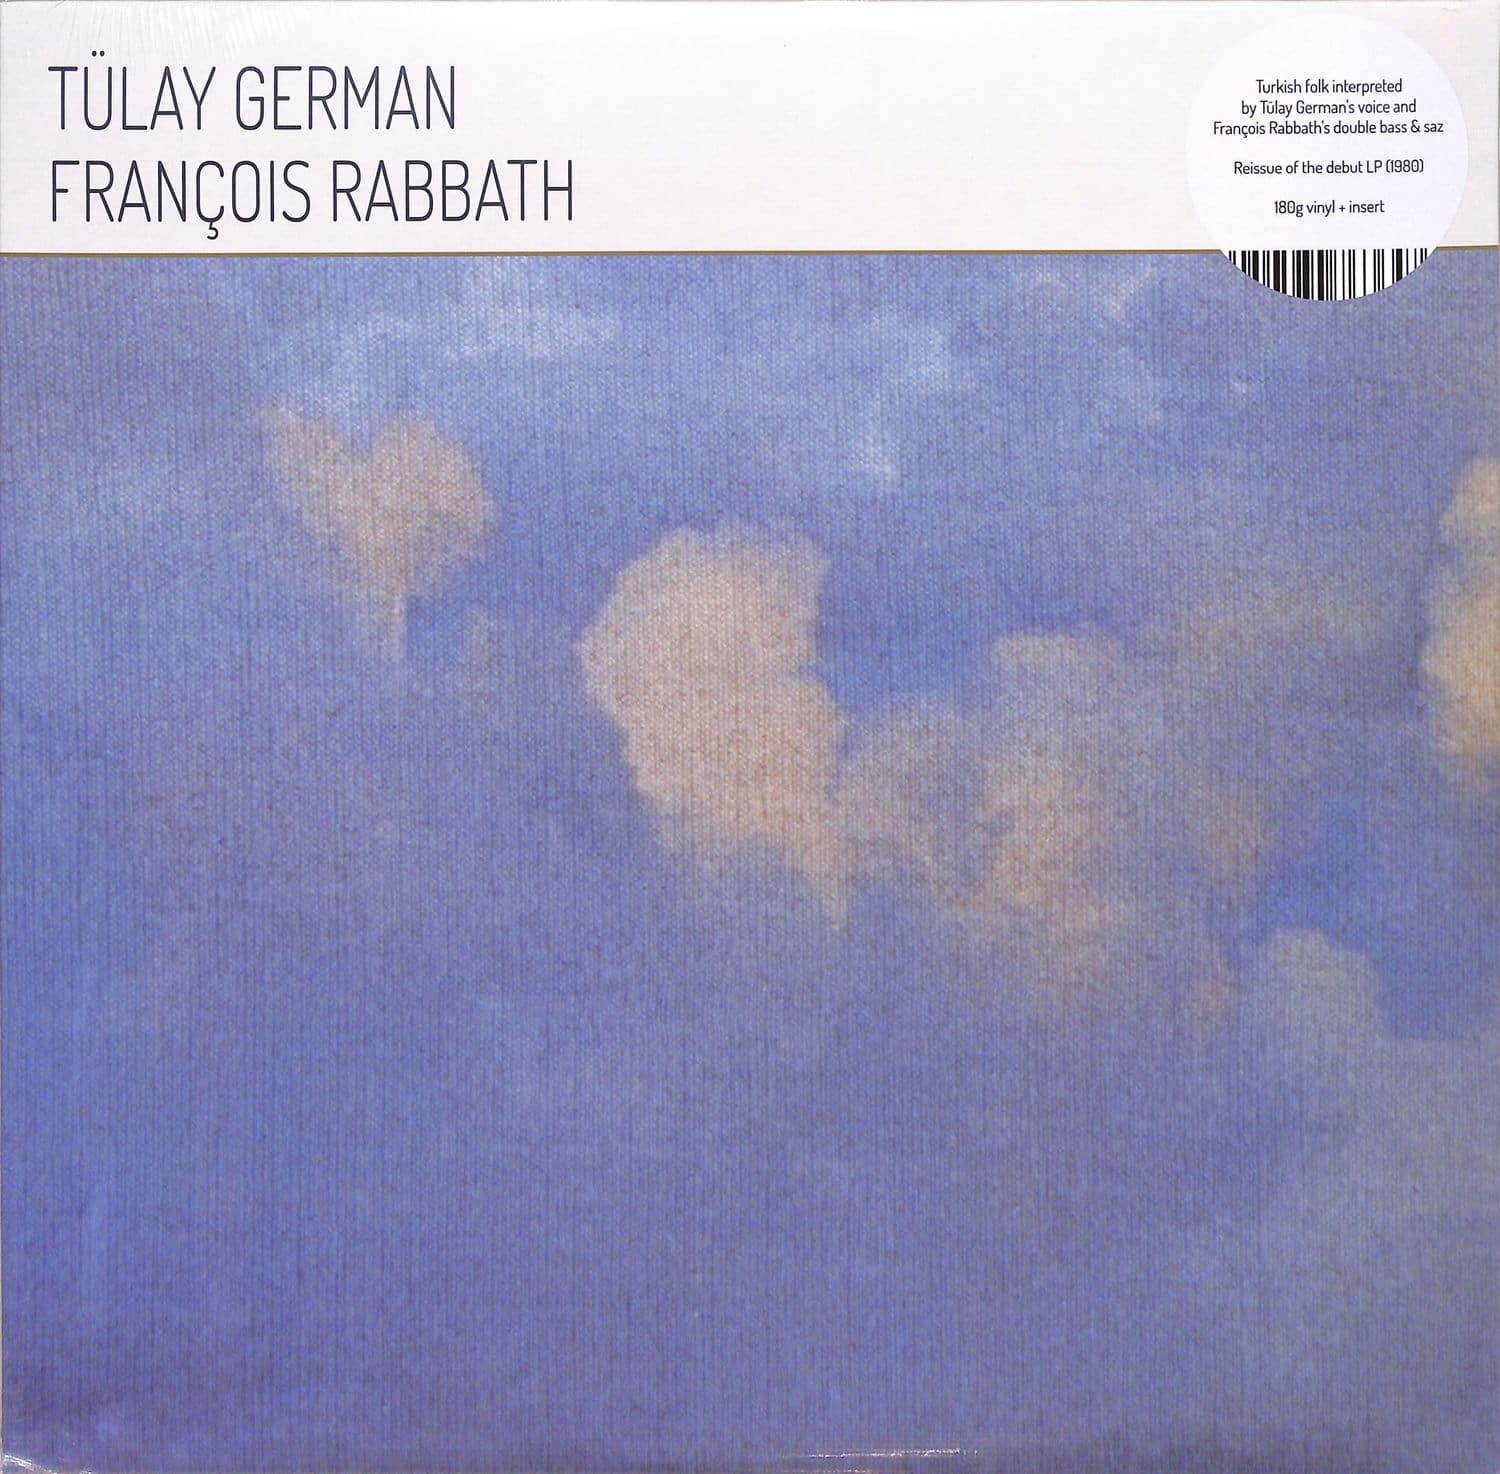 Tulay German & Francois Rabbath - TULAY GERMAN & FRANCOIS RABBATH 